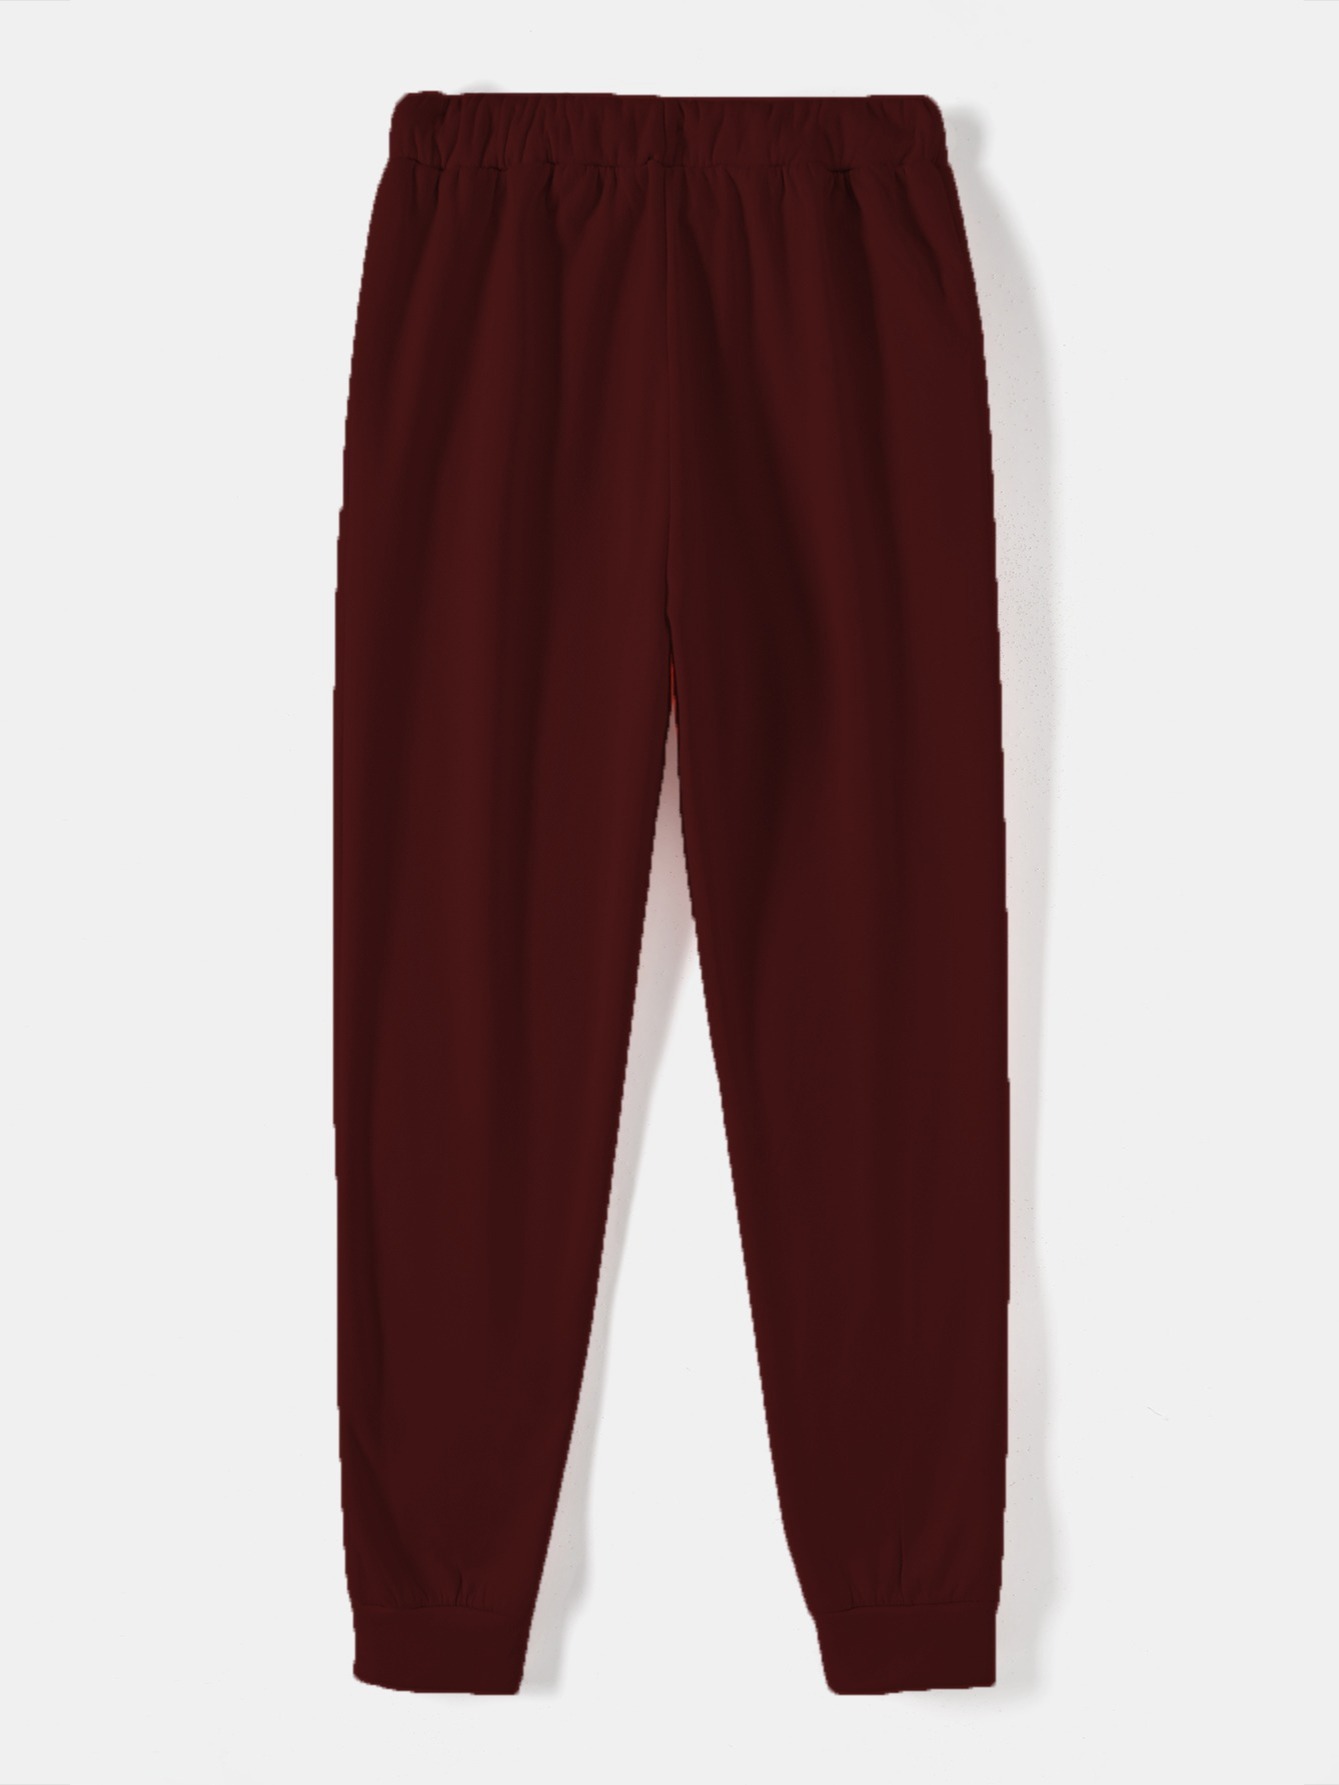 solid drawstring thermal sweatpants versatile loose comfy jogger pants womens clothing details 13